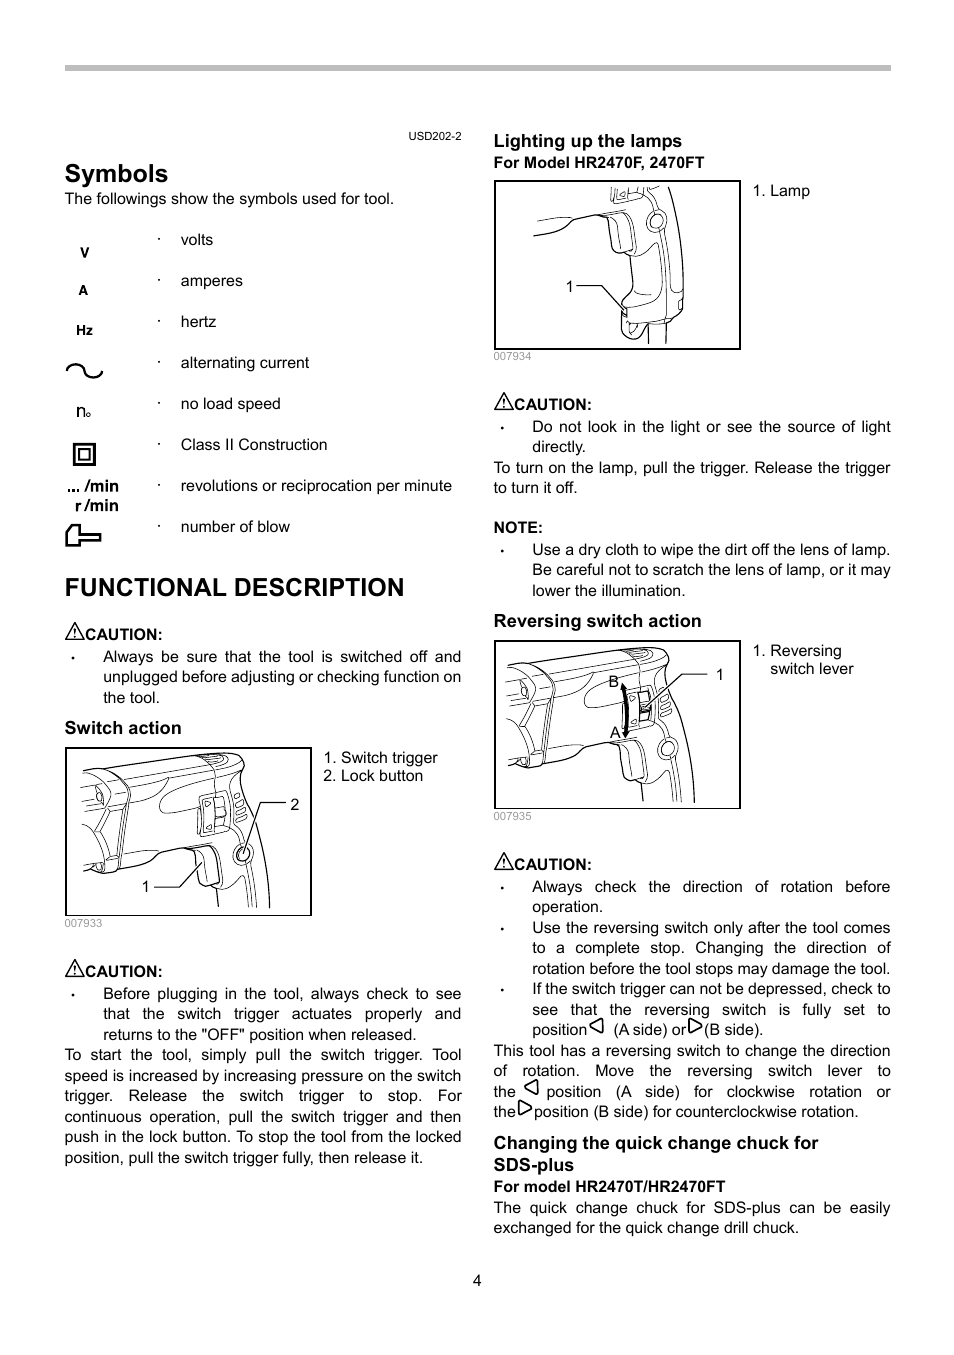 Symbols, Functional description | Makita HR2470 User Manual | Page 4 / 28 |  Original mode